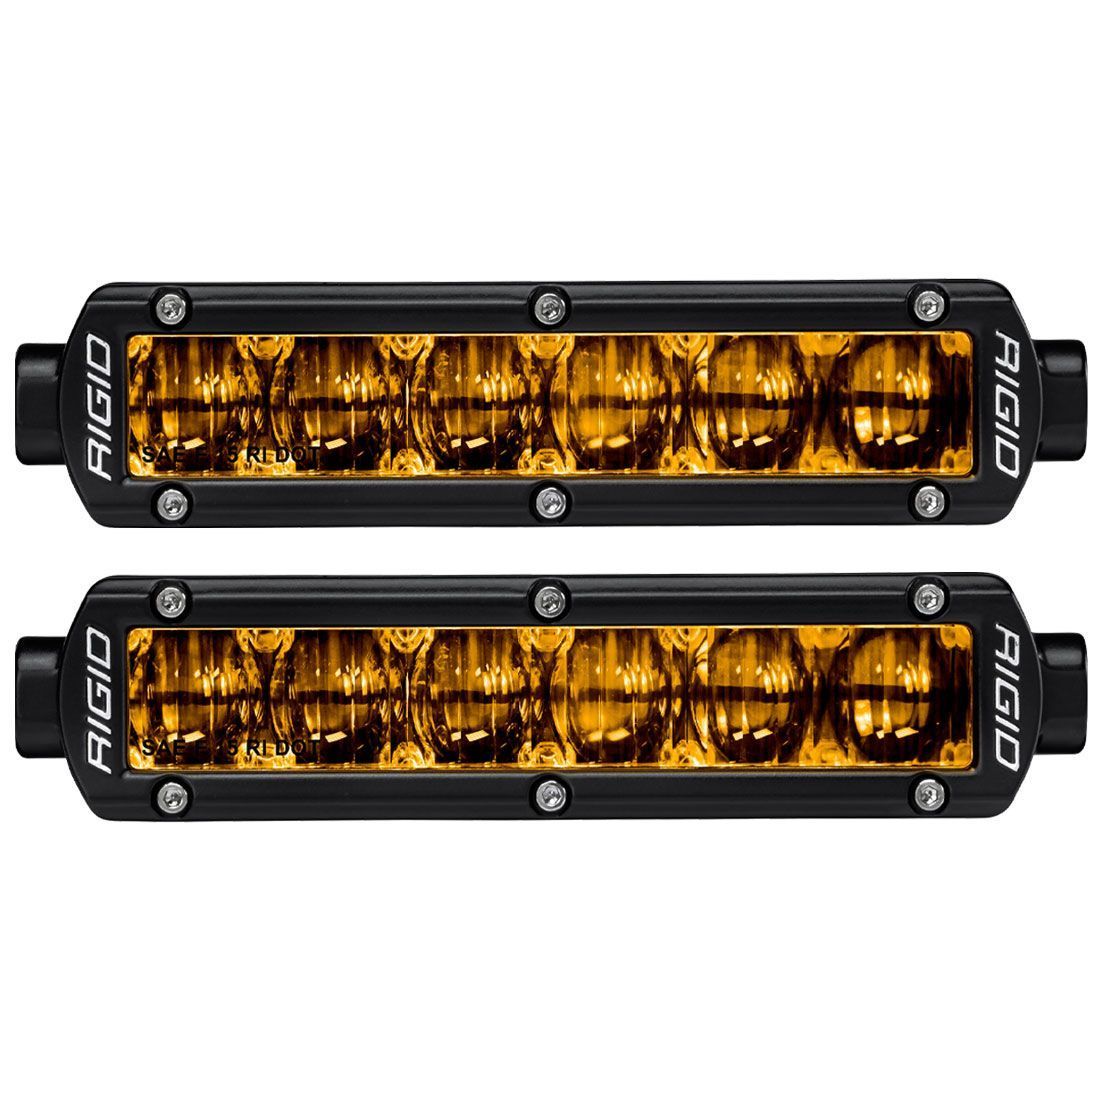 SAE Compliant 6" SR-Series LED Light Bar (Pair) Lighting Rigid Industries Amber (J583 DOT) 